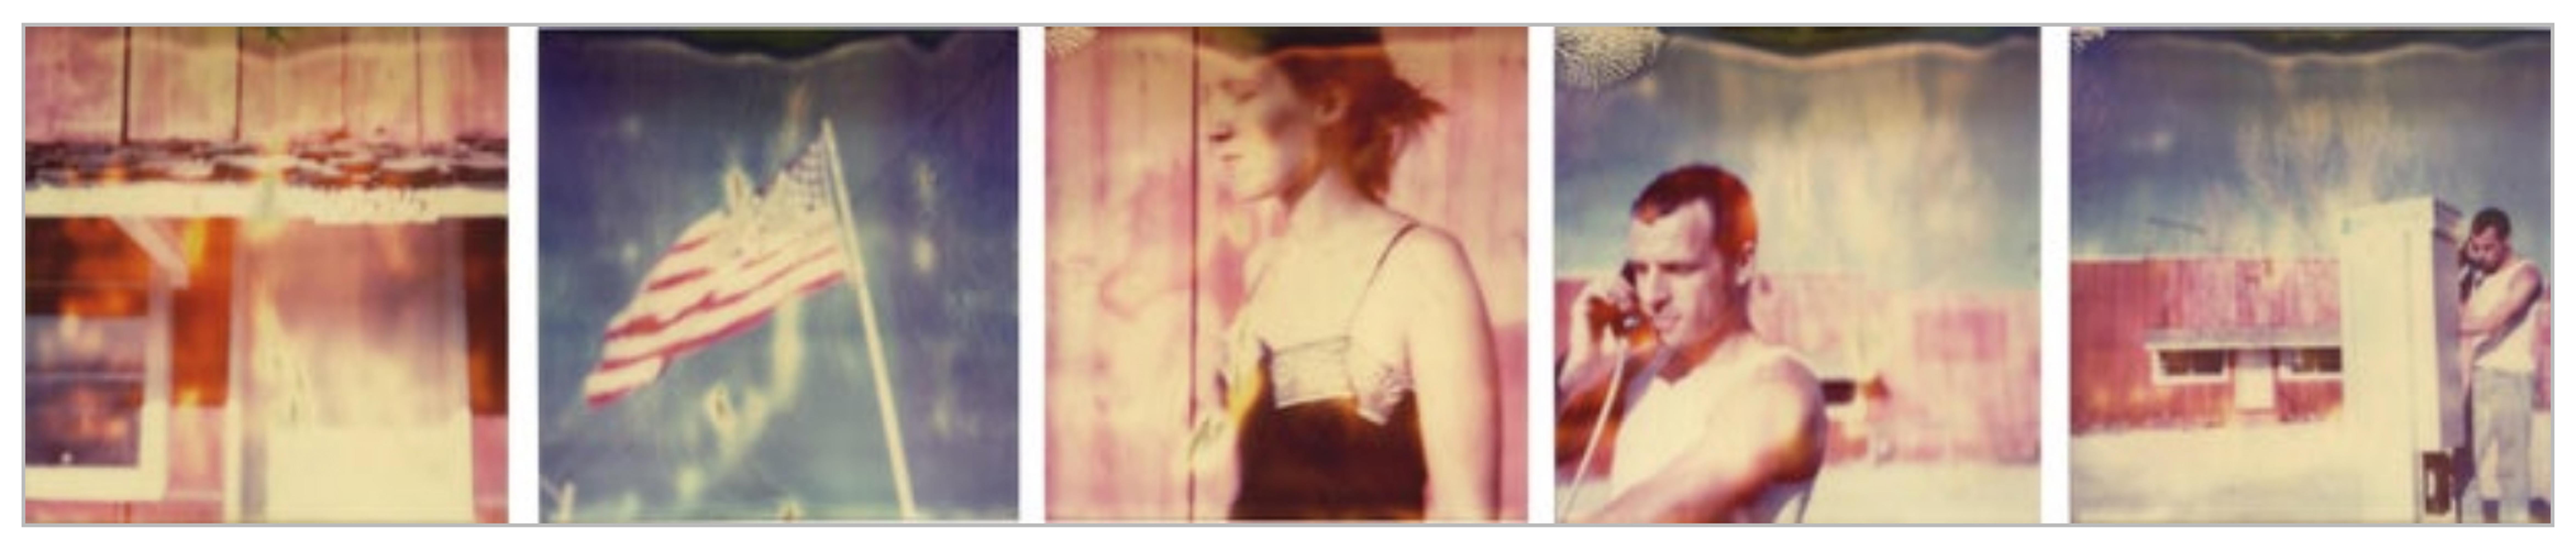 10525 (Stranger than Paradise) - Polaroid, Contemporary - Photograph by Stefanie Schneider